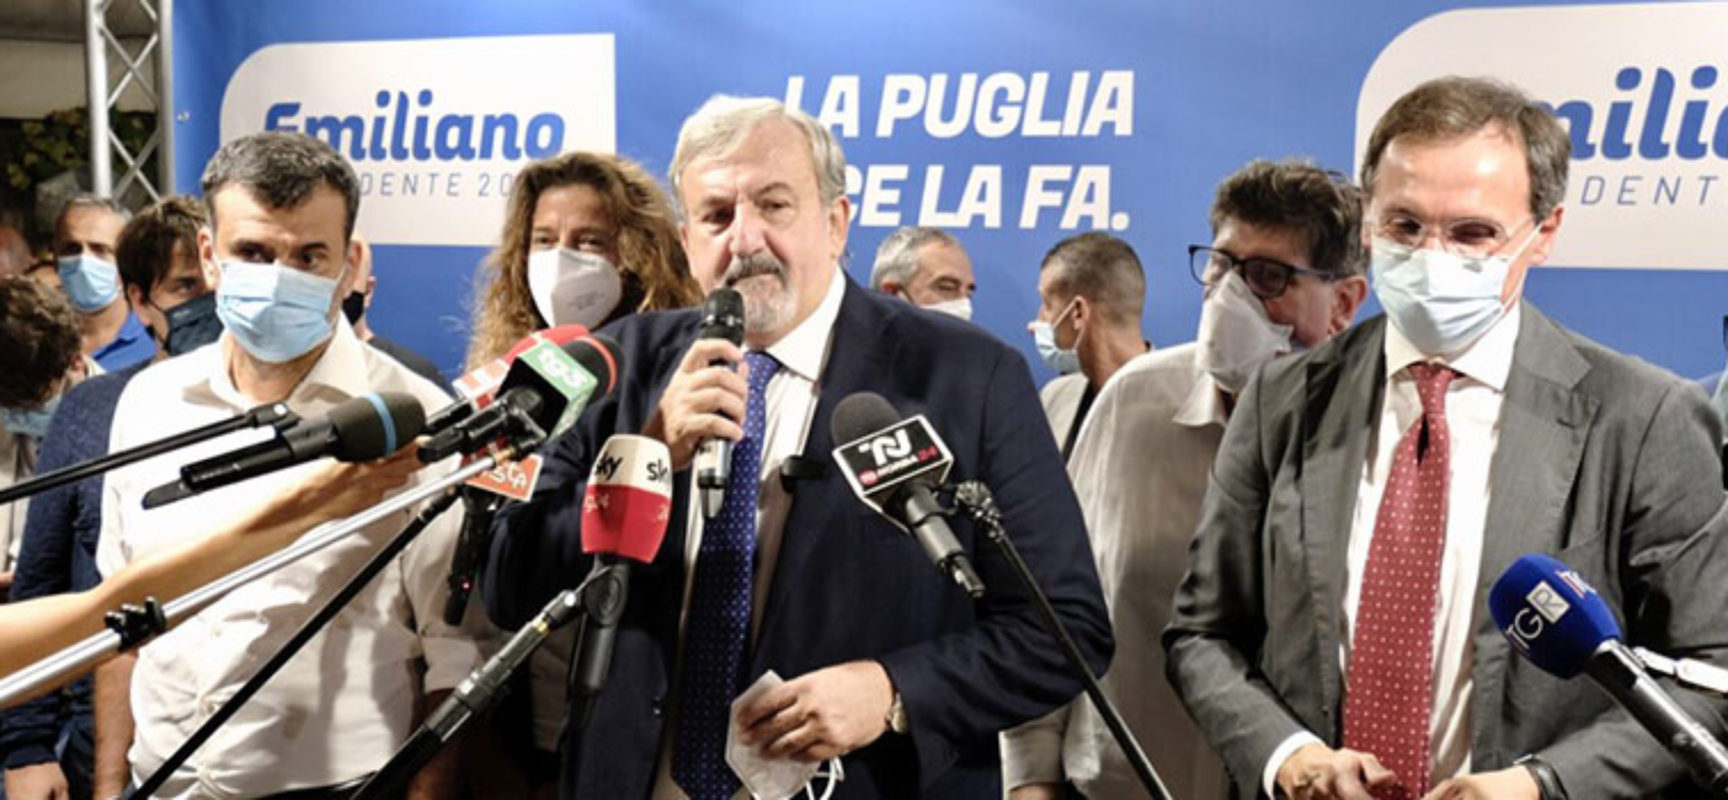 Regionali Puglia 2020: Emiliano si impone nettamente ancha a Bisceglie / Dati definitivi